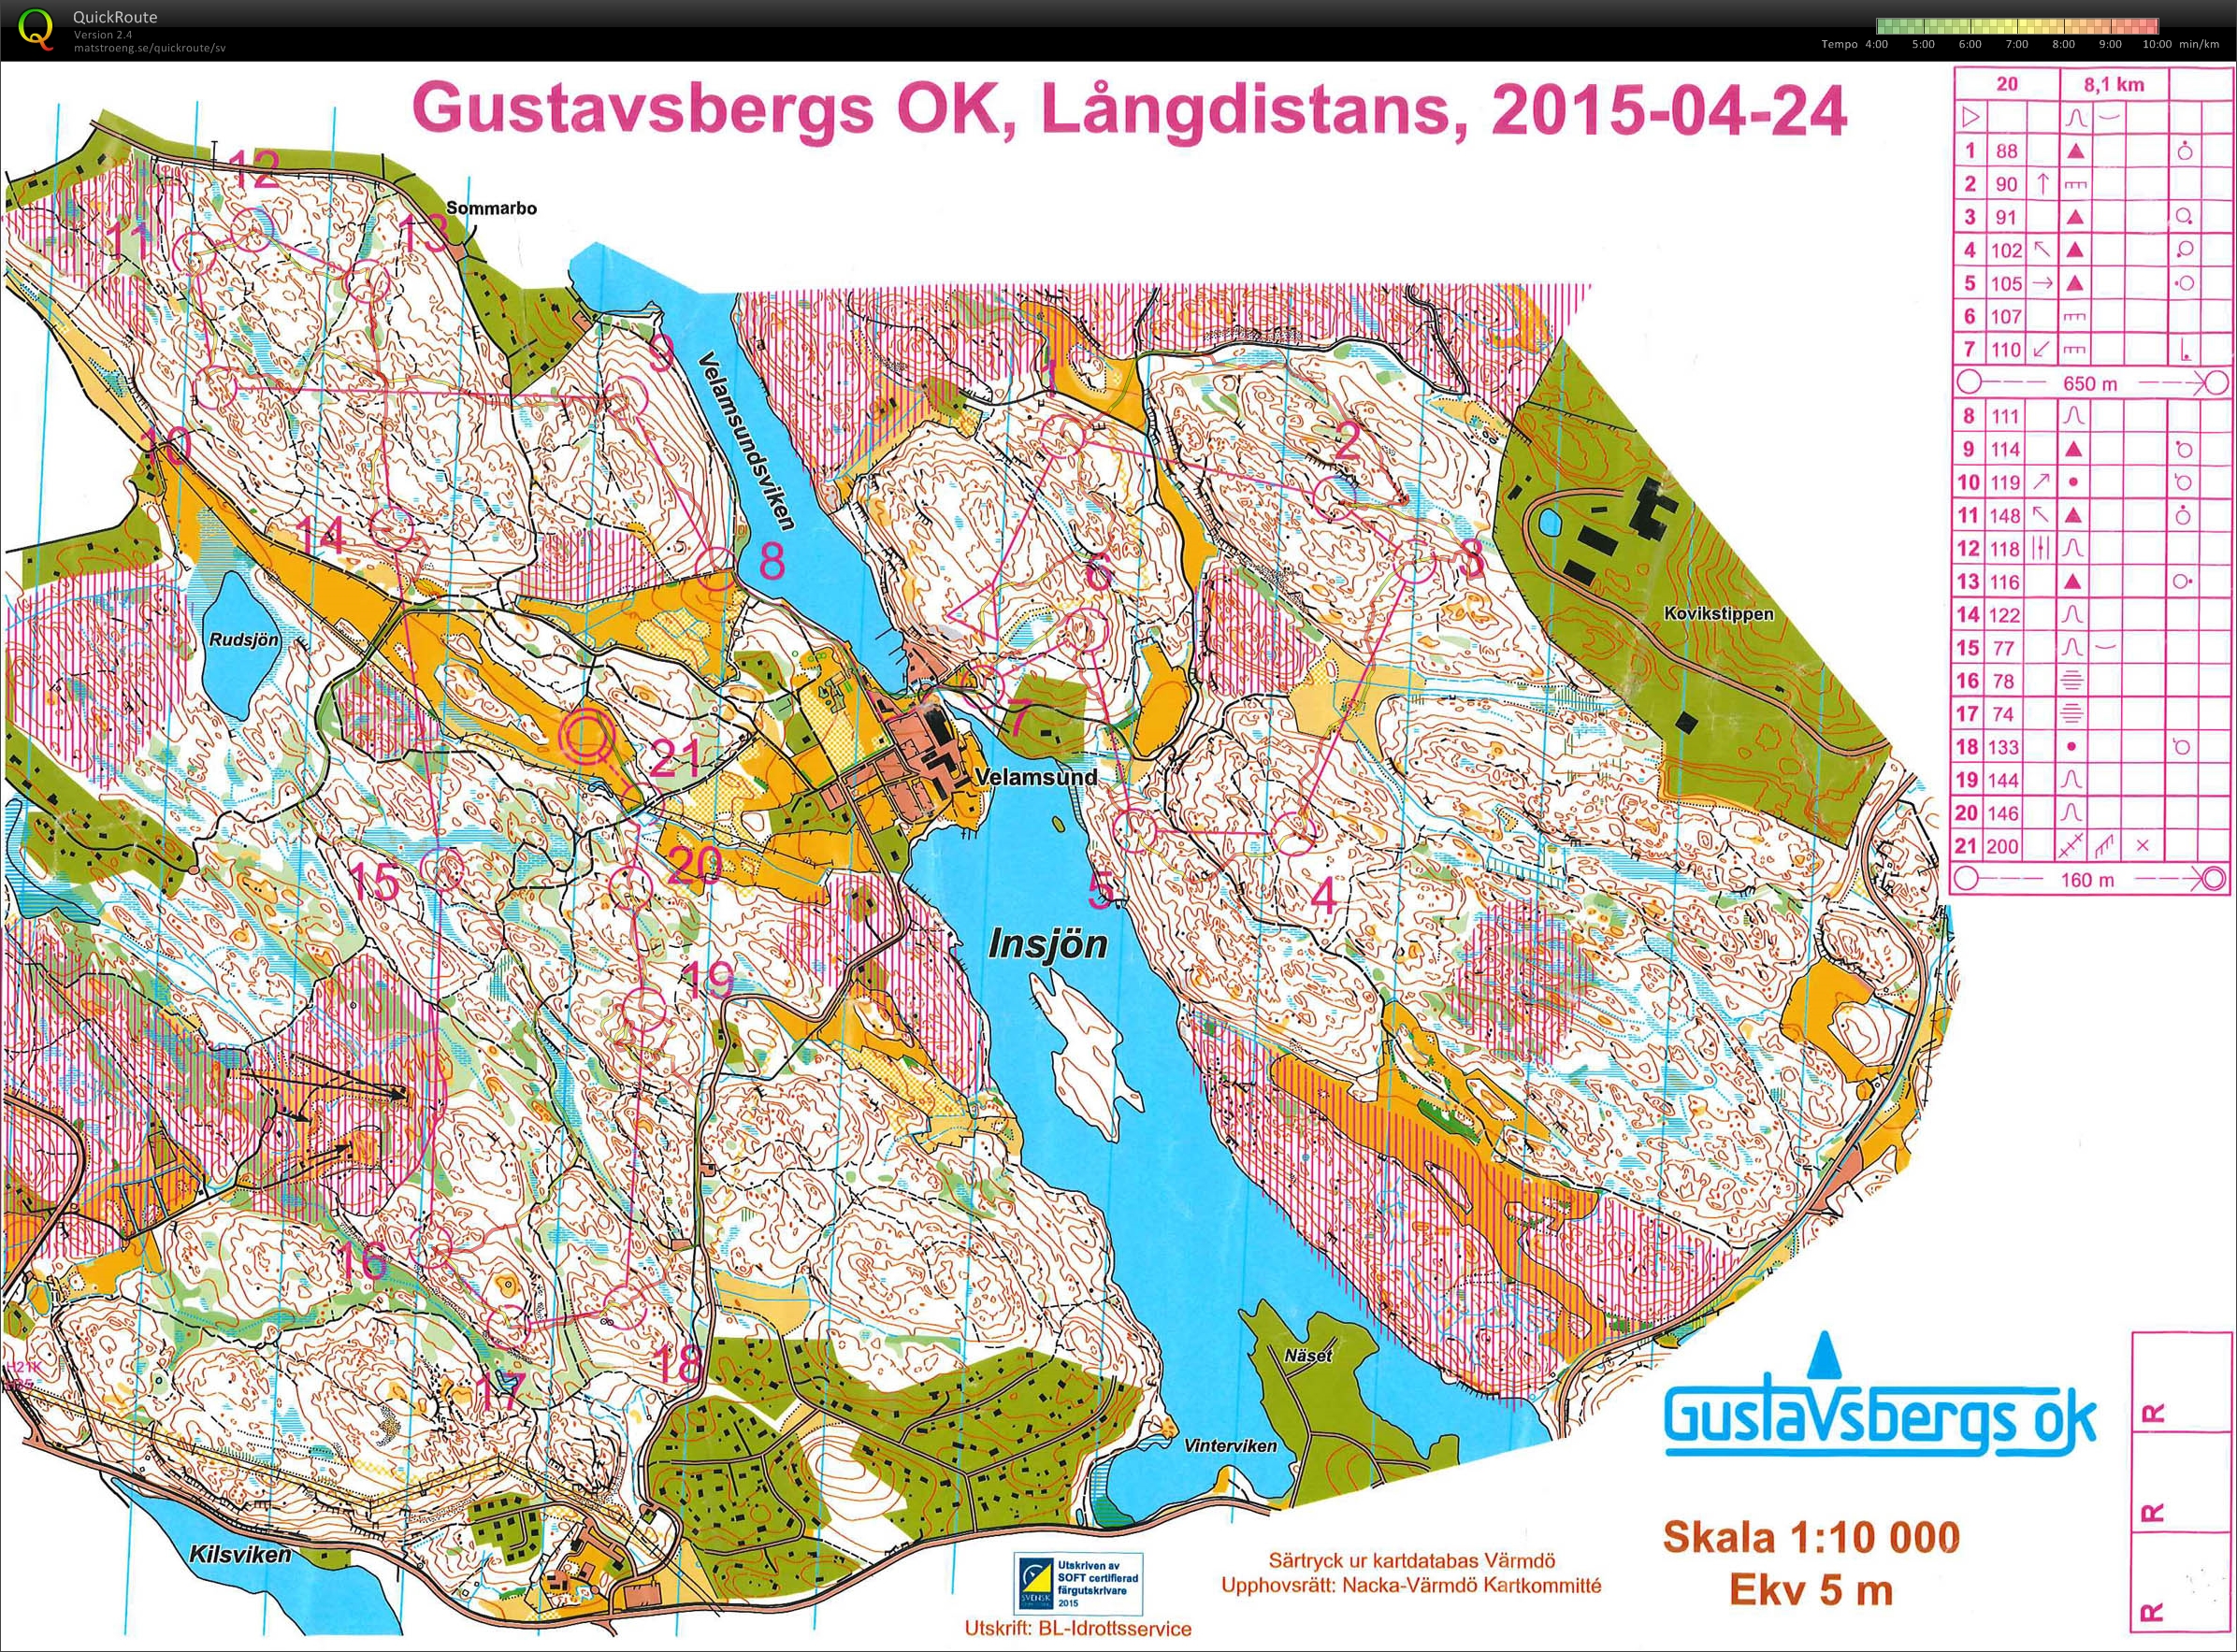 Gustavsbergs OK långdistans (25/04/2015)